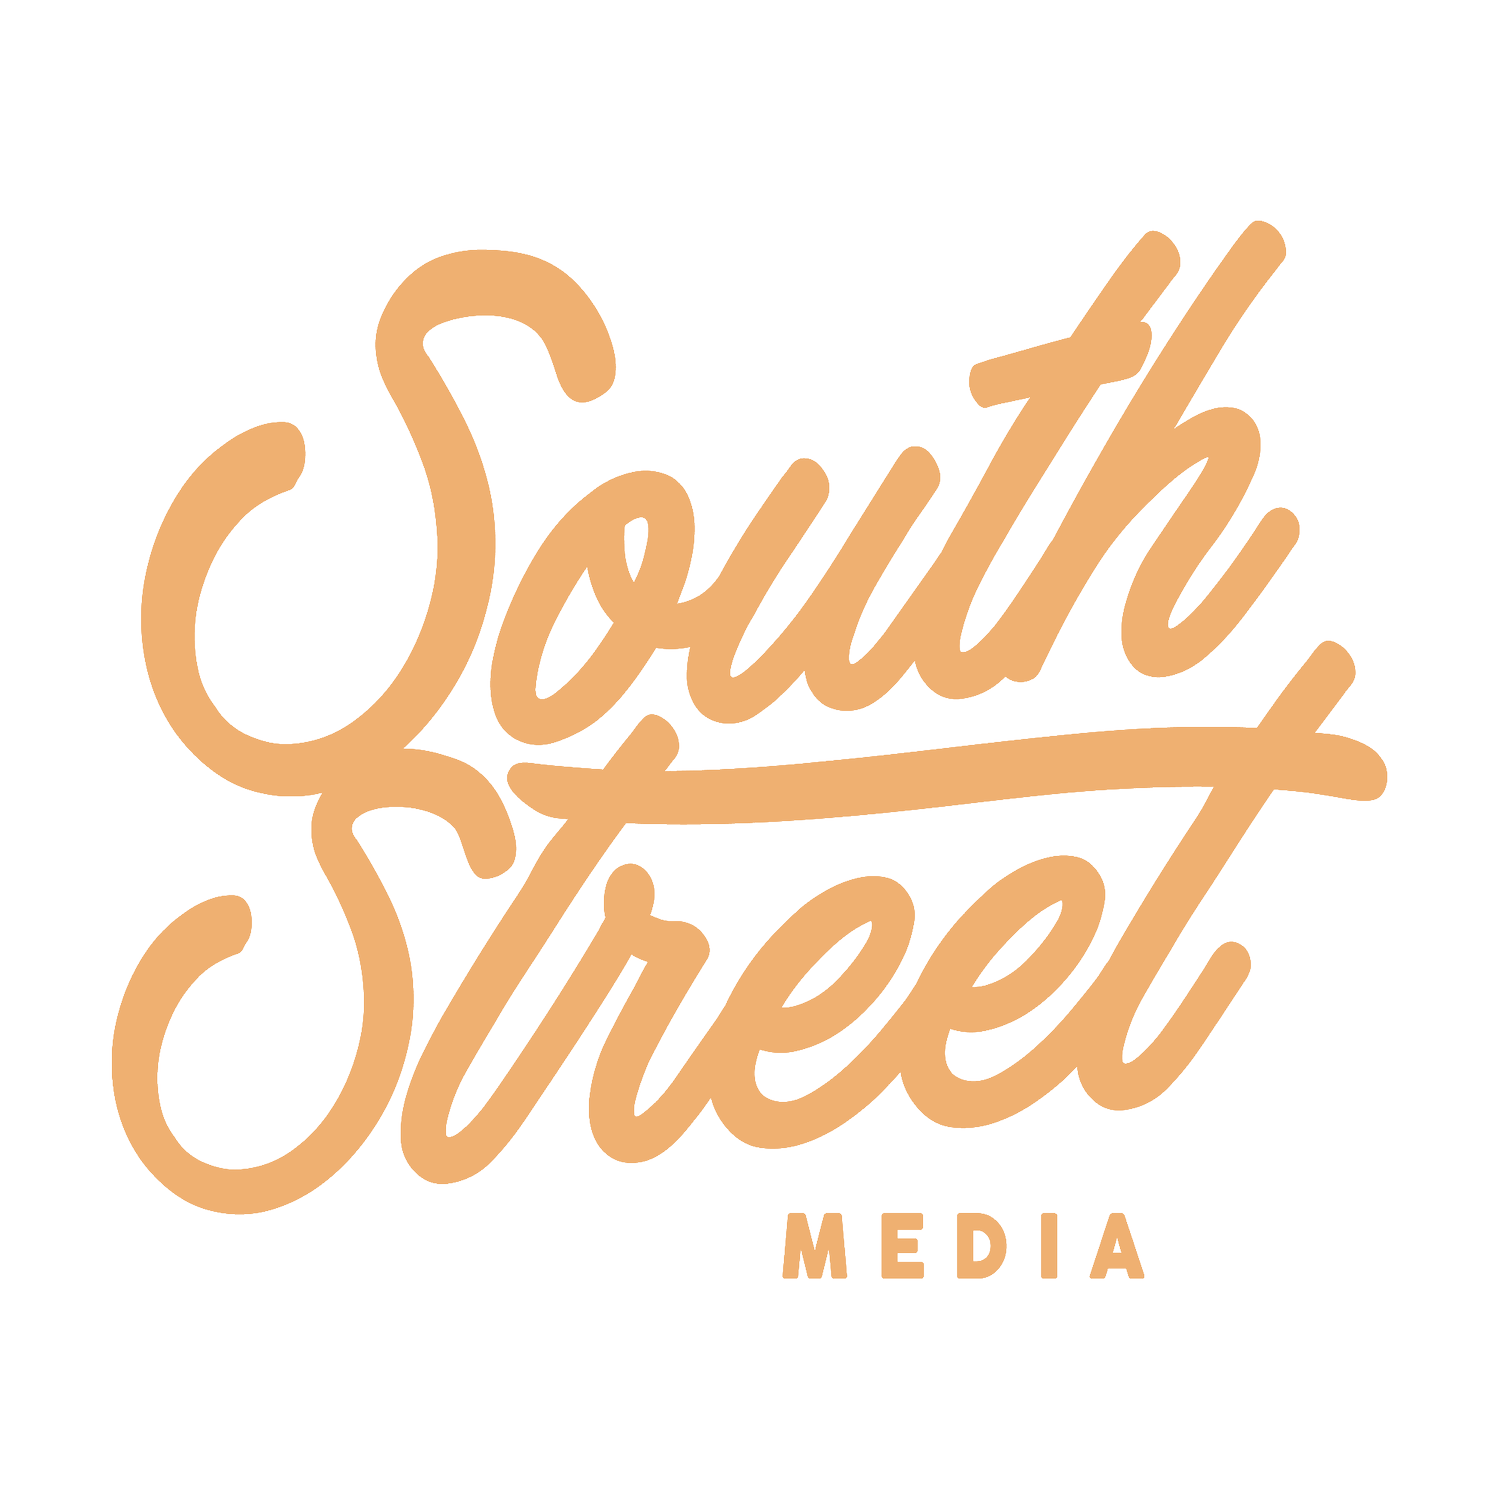 South Street Media